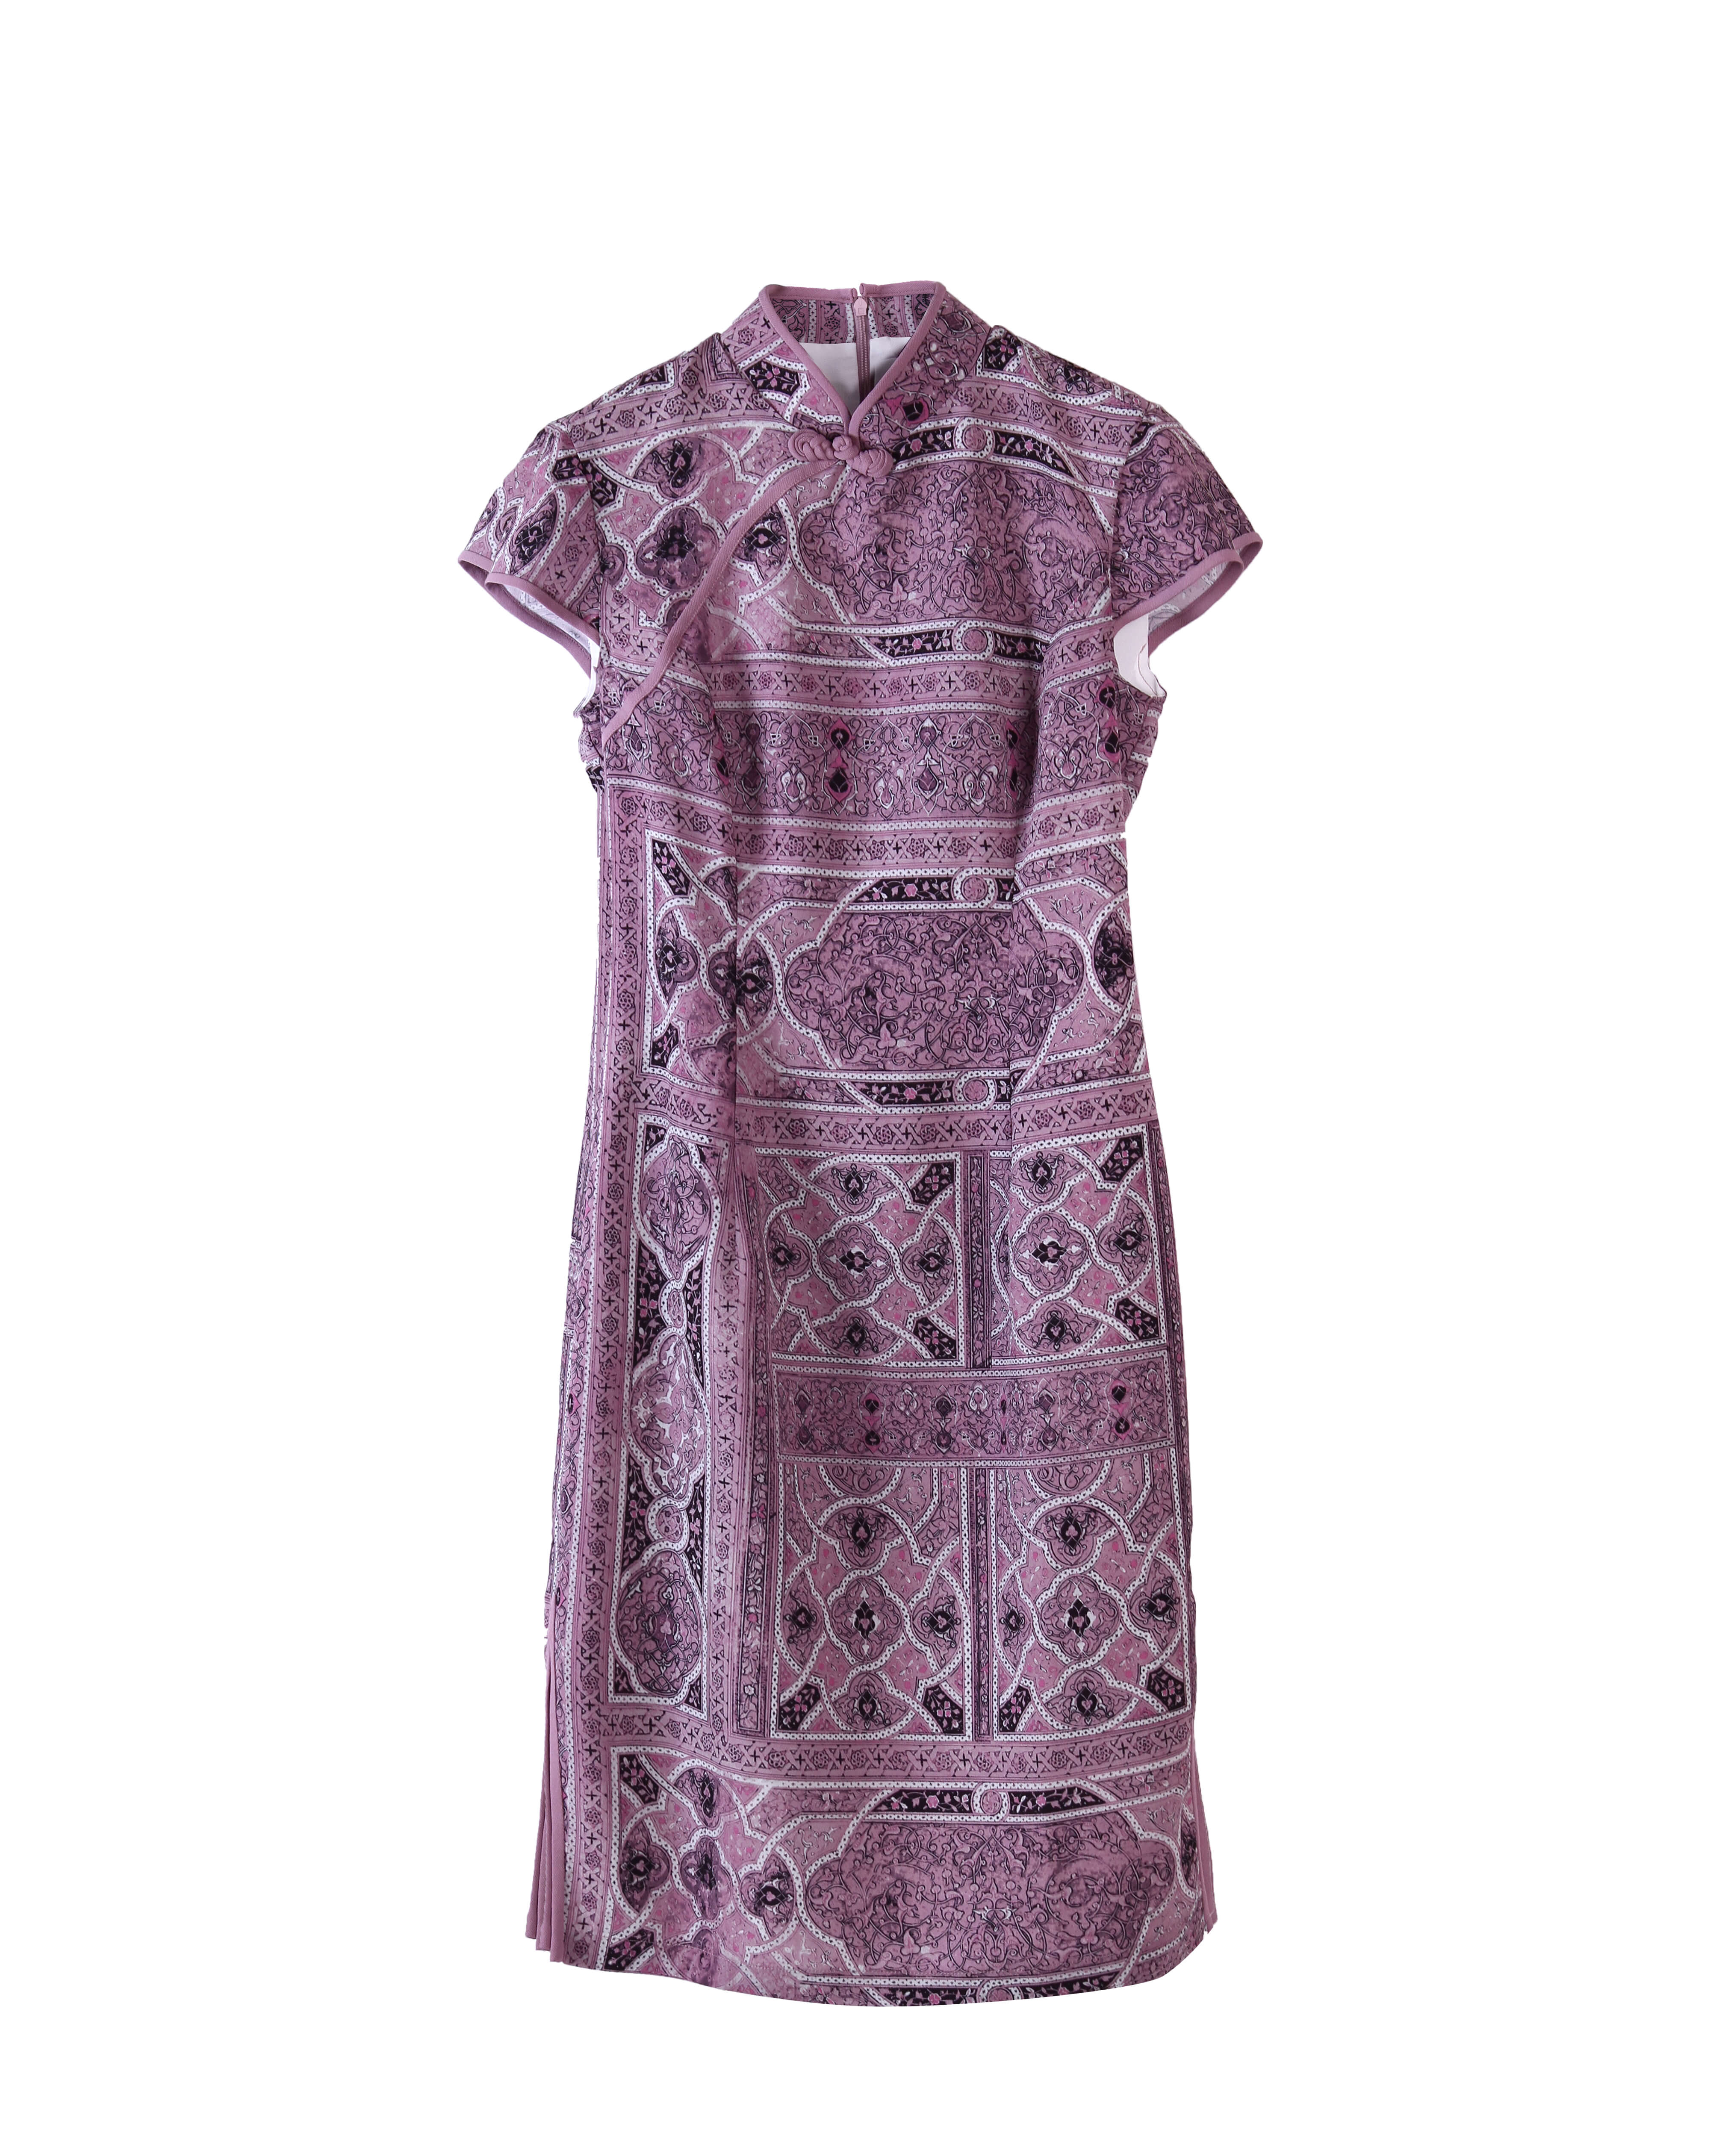 Shahnameh 旗袍 - 12个回收水瓶 - 薰衣草紫色｜AKM Shahnameh Qipao Dress - 12 Recycled Water Bottles - Lavender